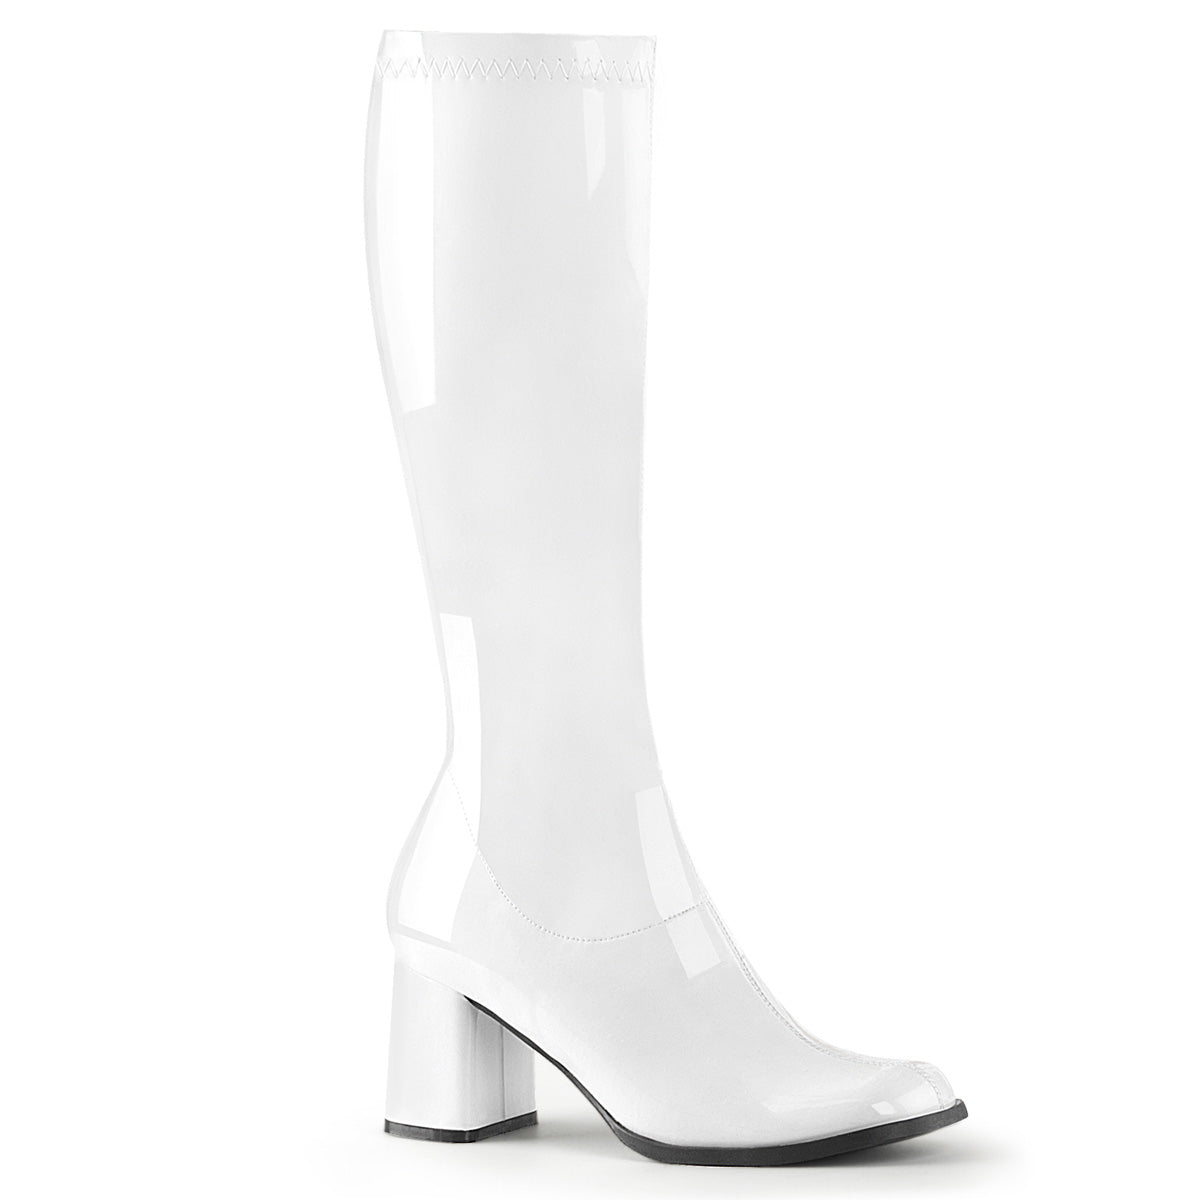 GOGO-300 3 Inch Heel White Women's Boots Funtasma Costume Shoes